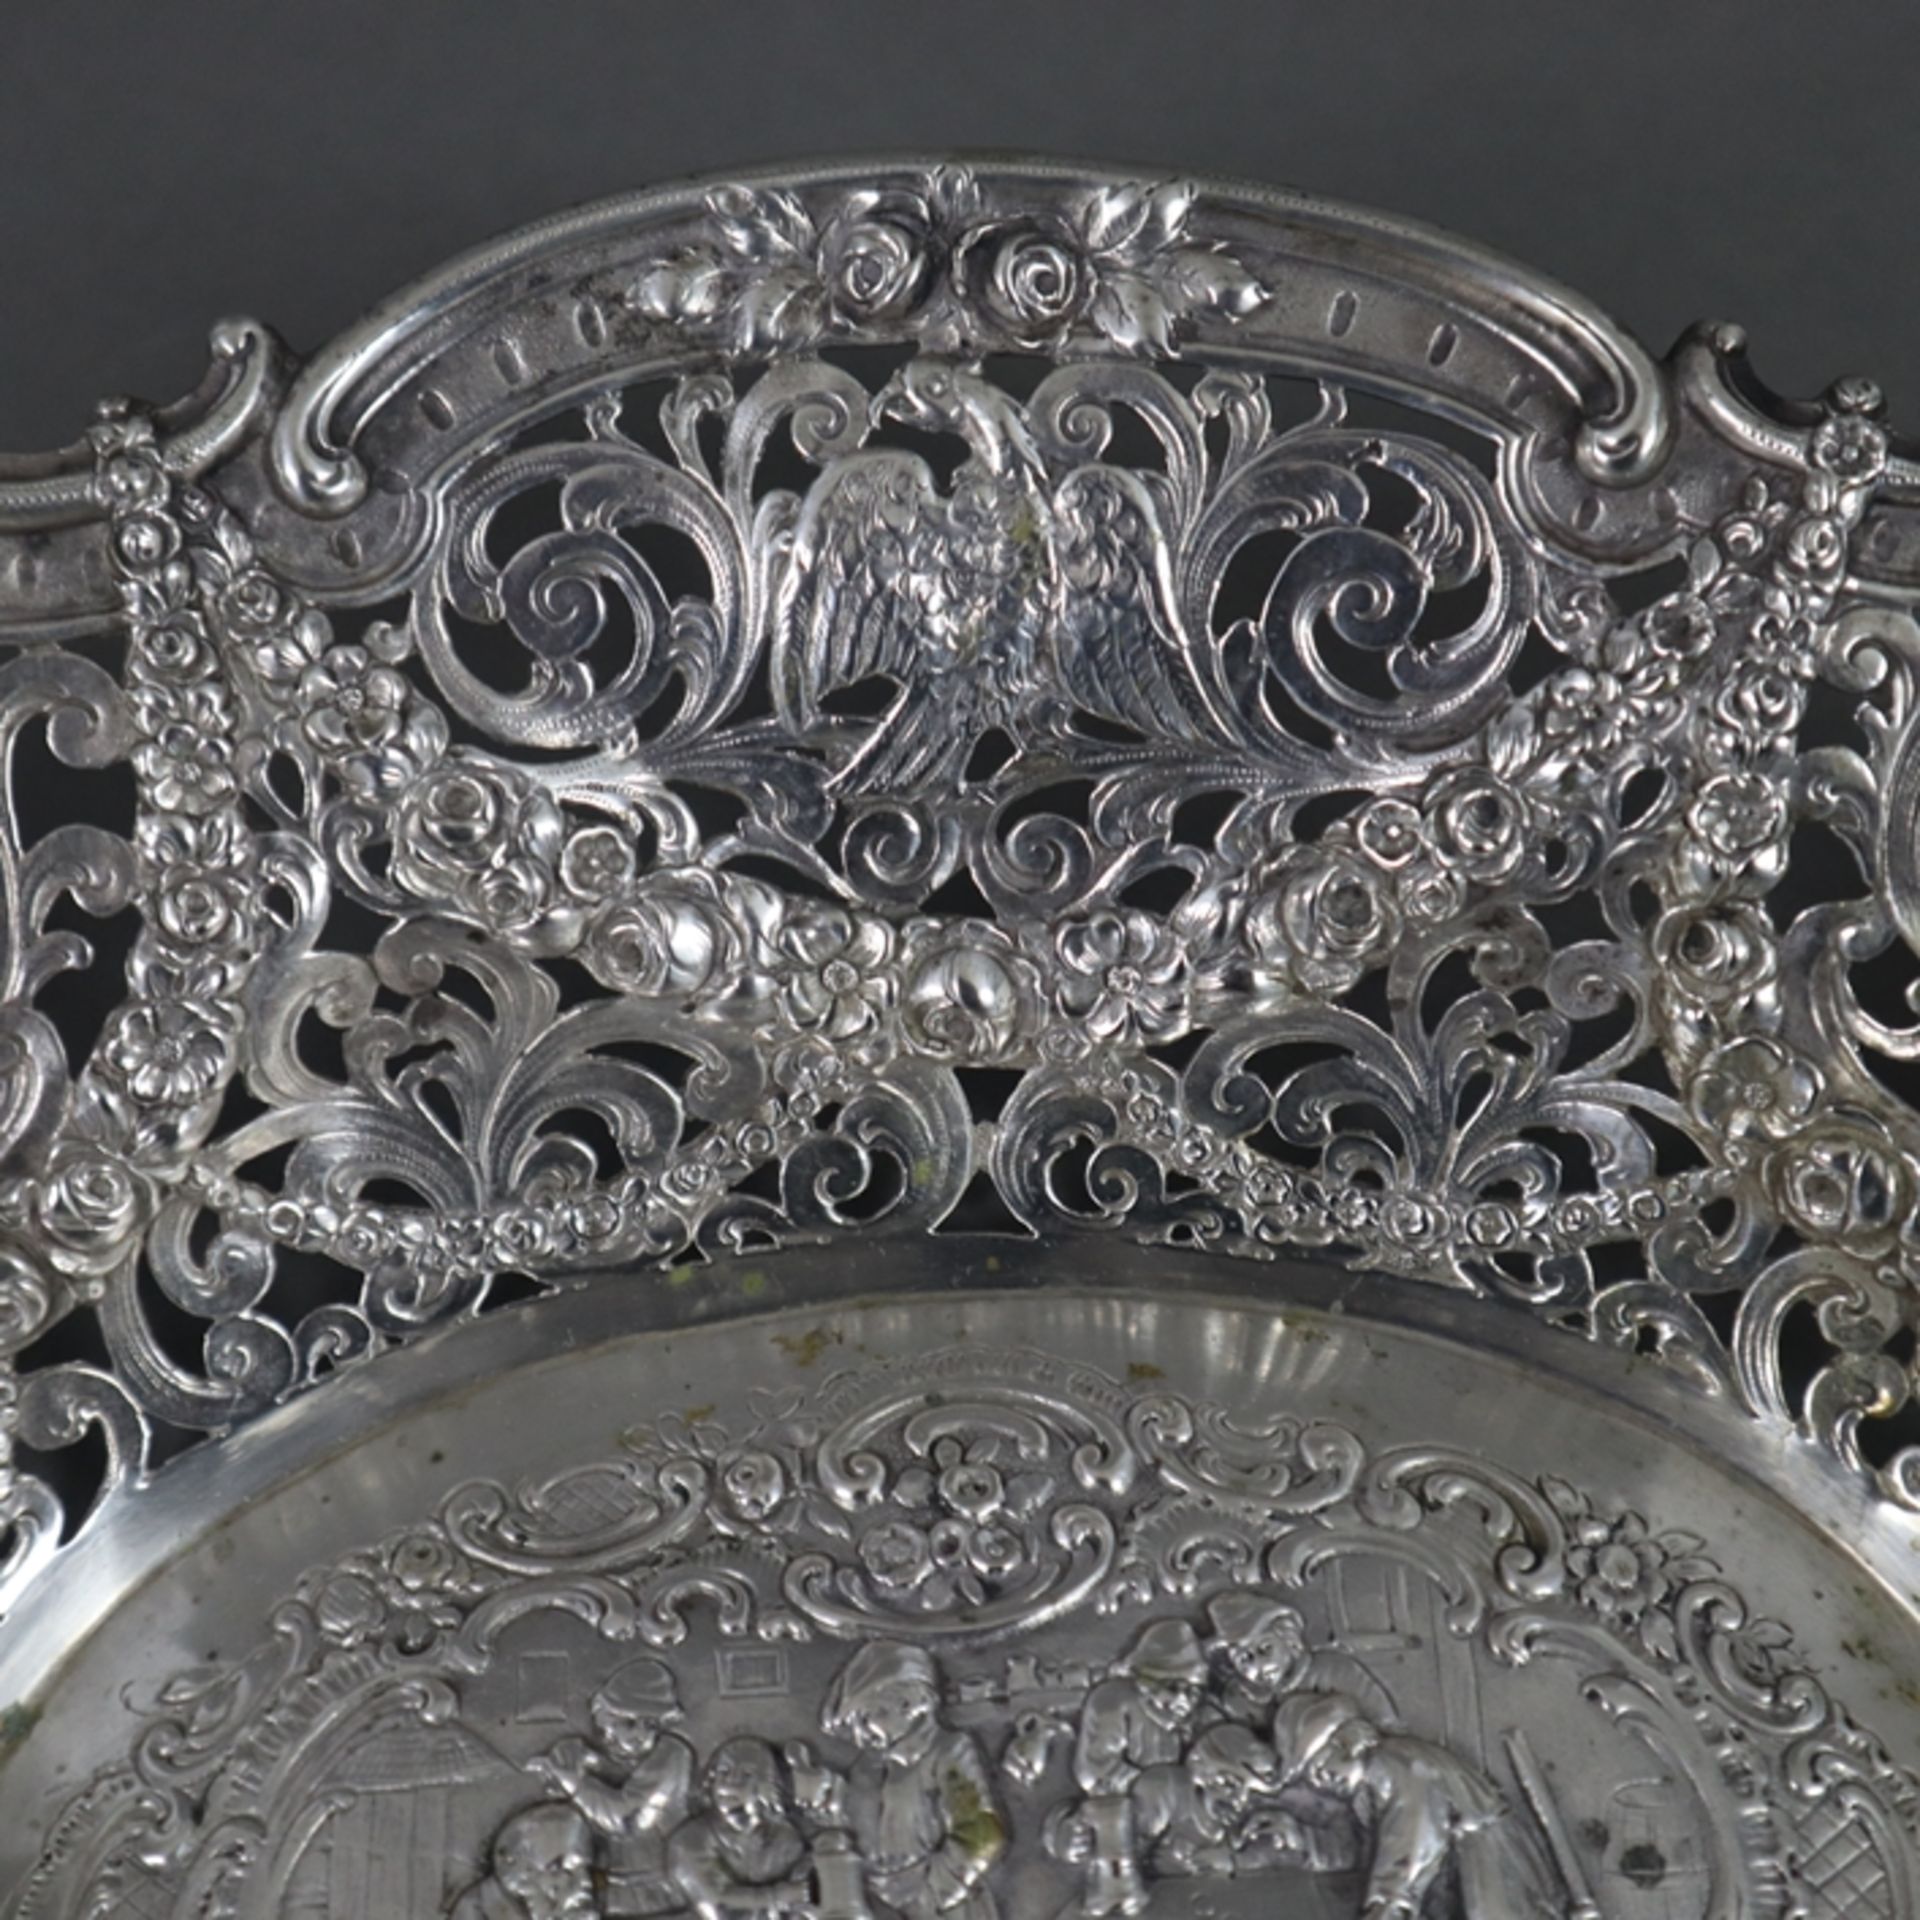 Üppig dekorierte Korbschale - deutsch, Silber 800/000, gestempelt, oval, geschweifte filigran durch - Bild 4 aus 10